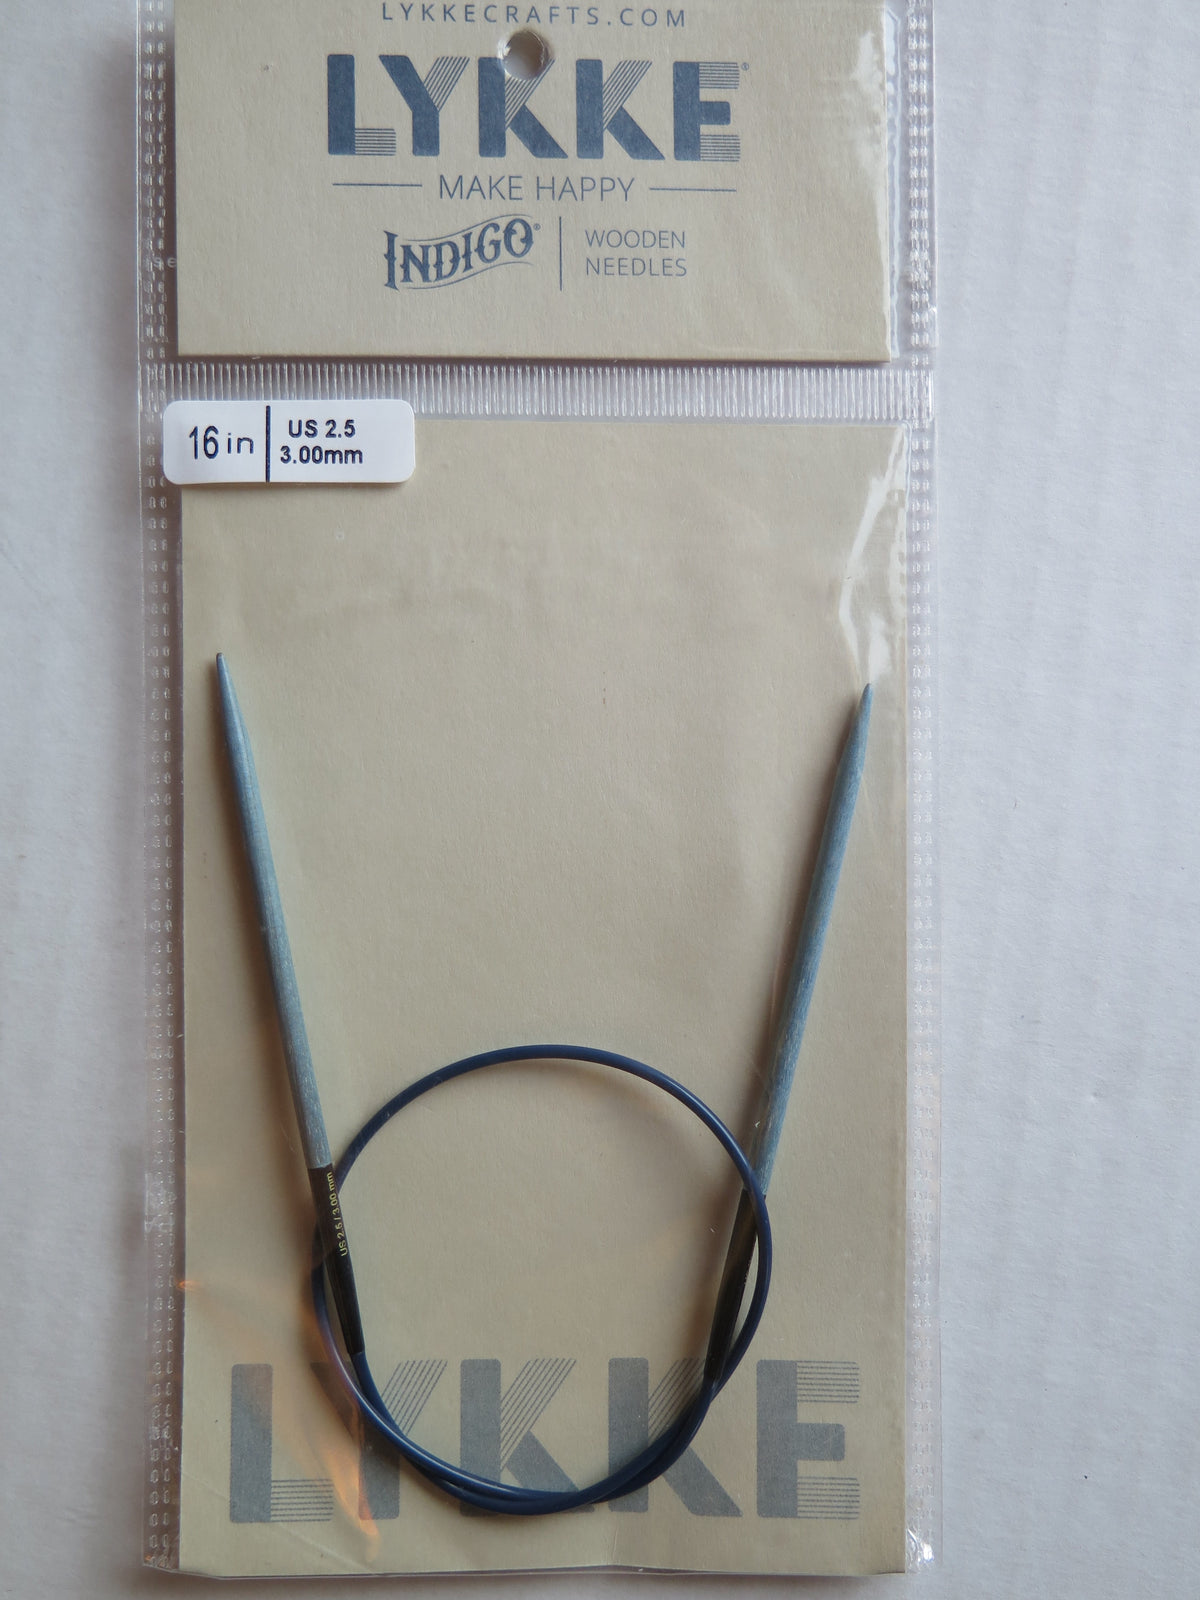 Lykke Indigo 16in US2.5 3.00mm Fixed Circular Needles